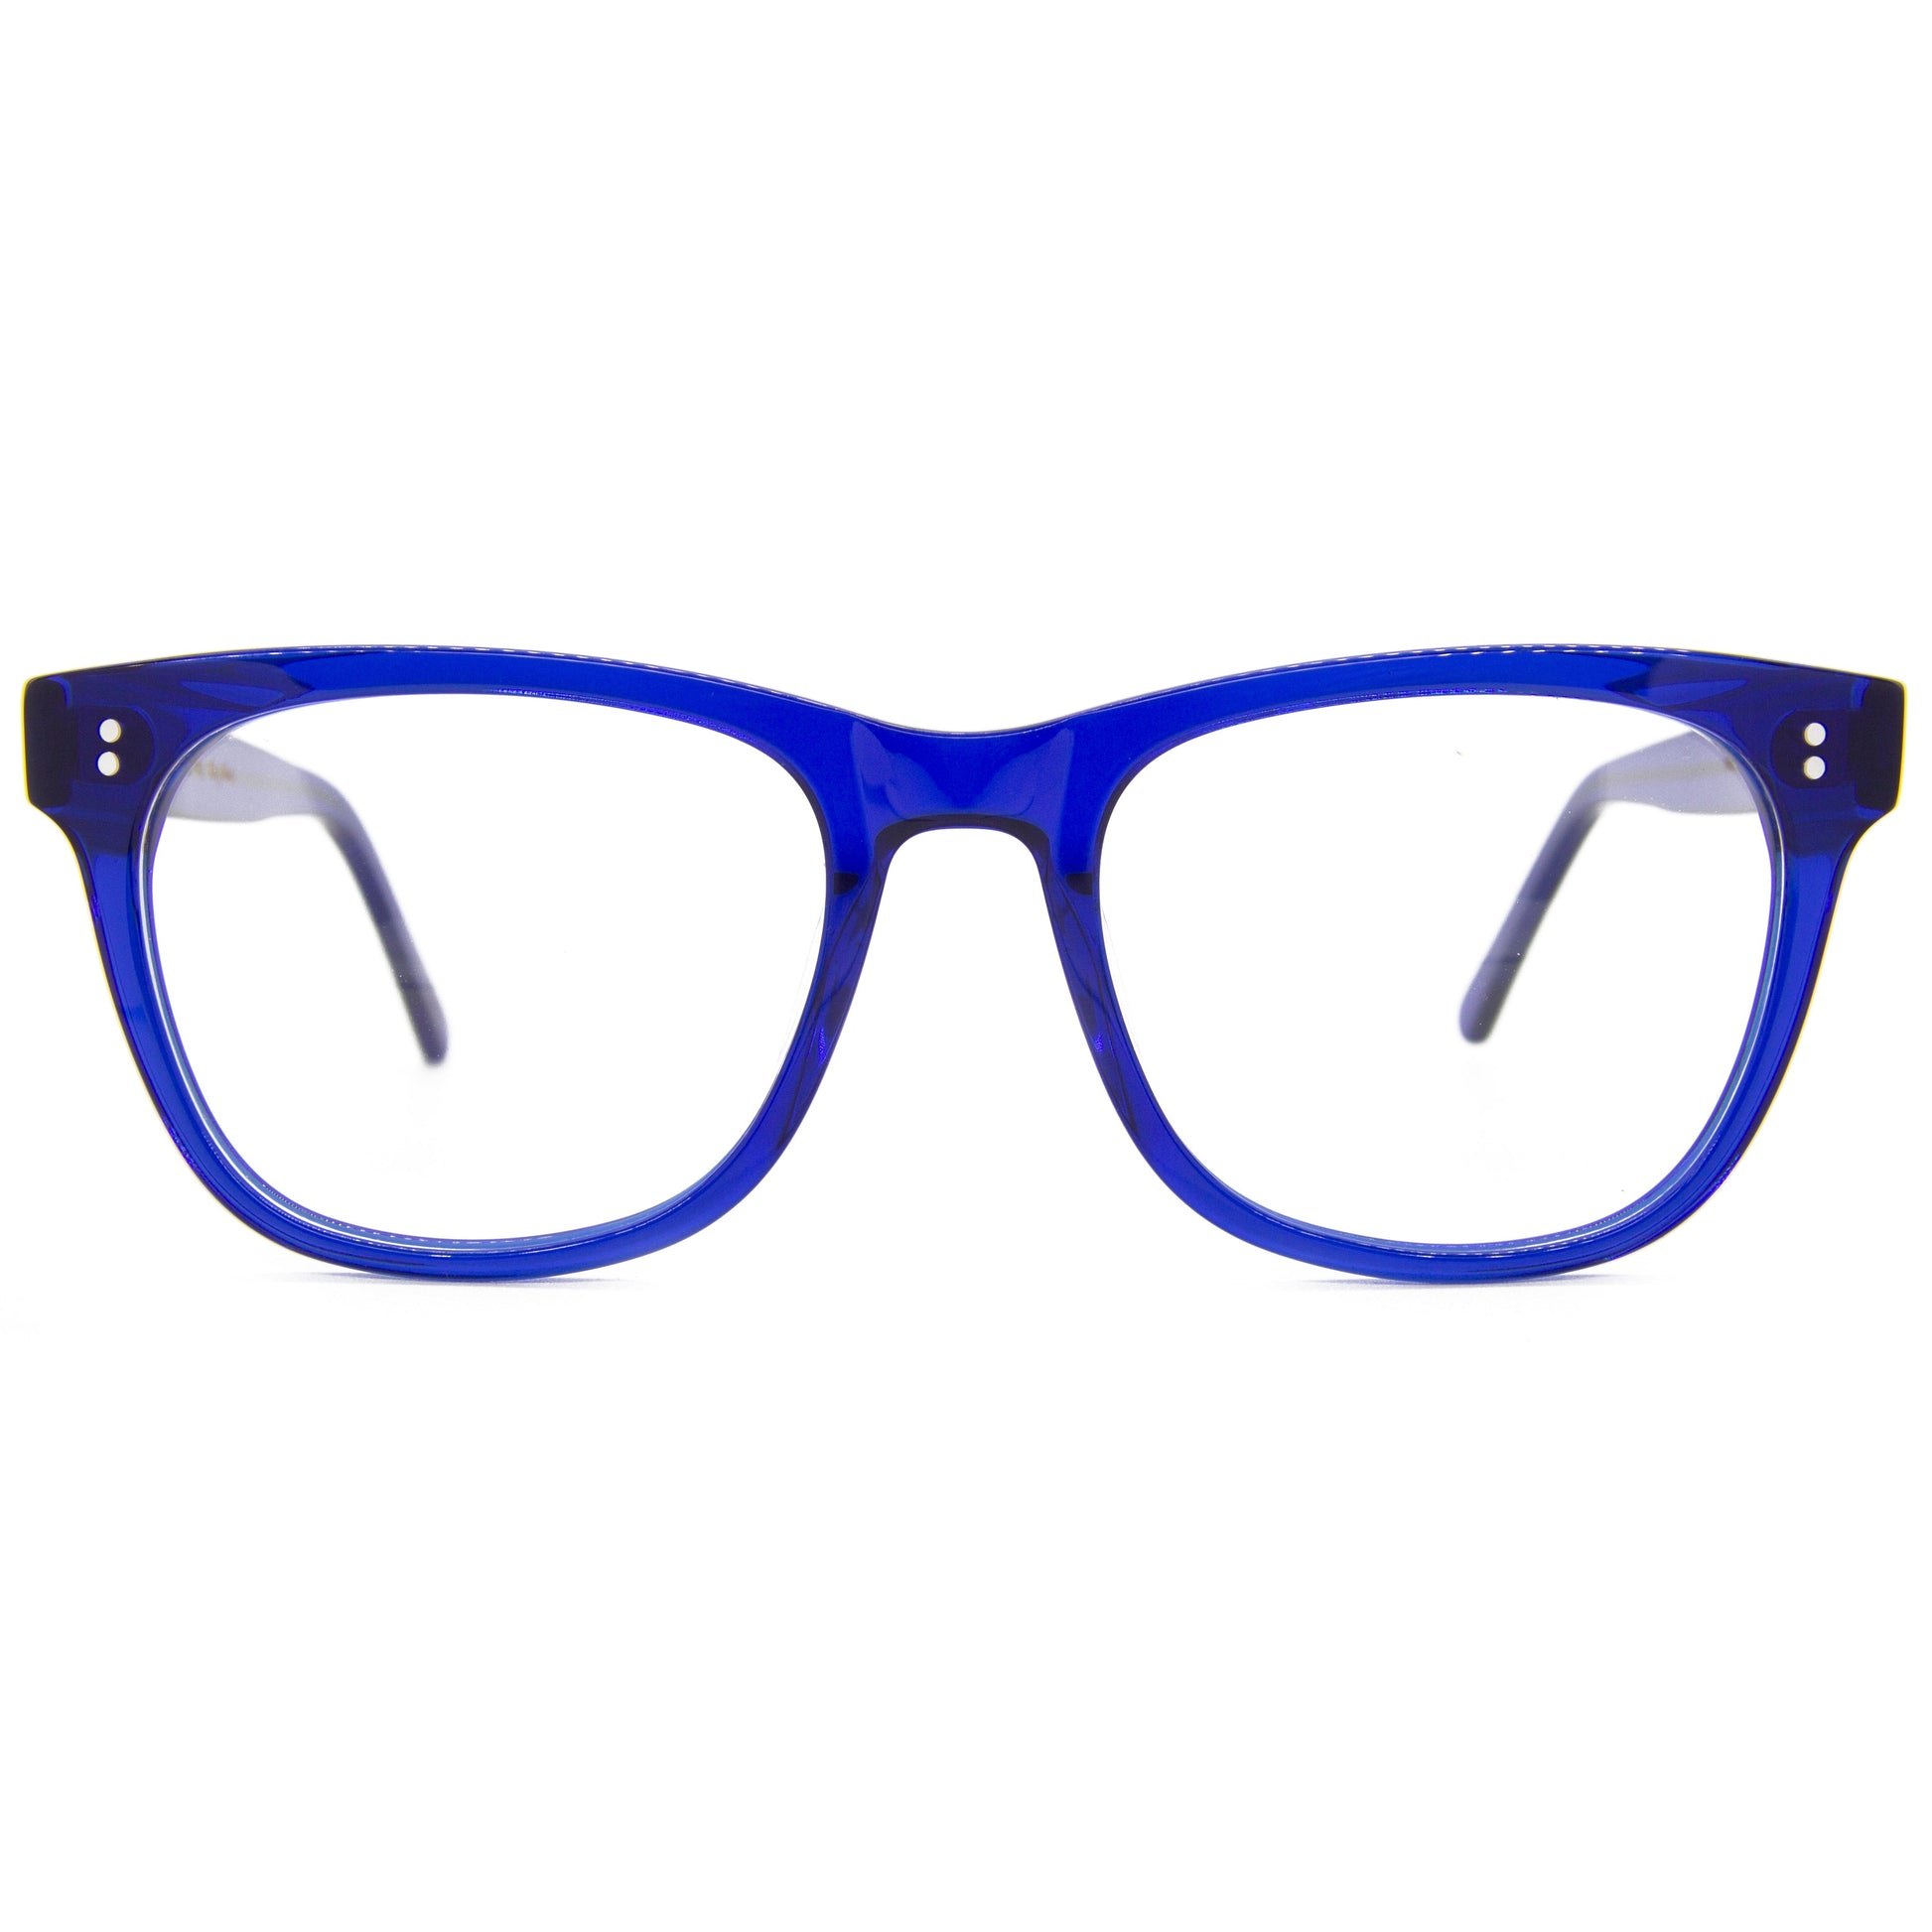 3 brothers - Big Maz - Blue - Prescription Glasses